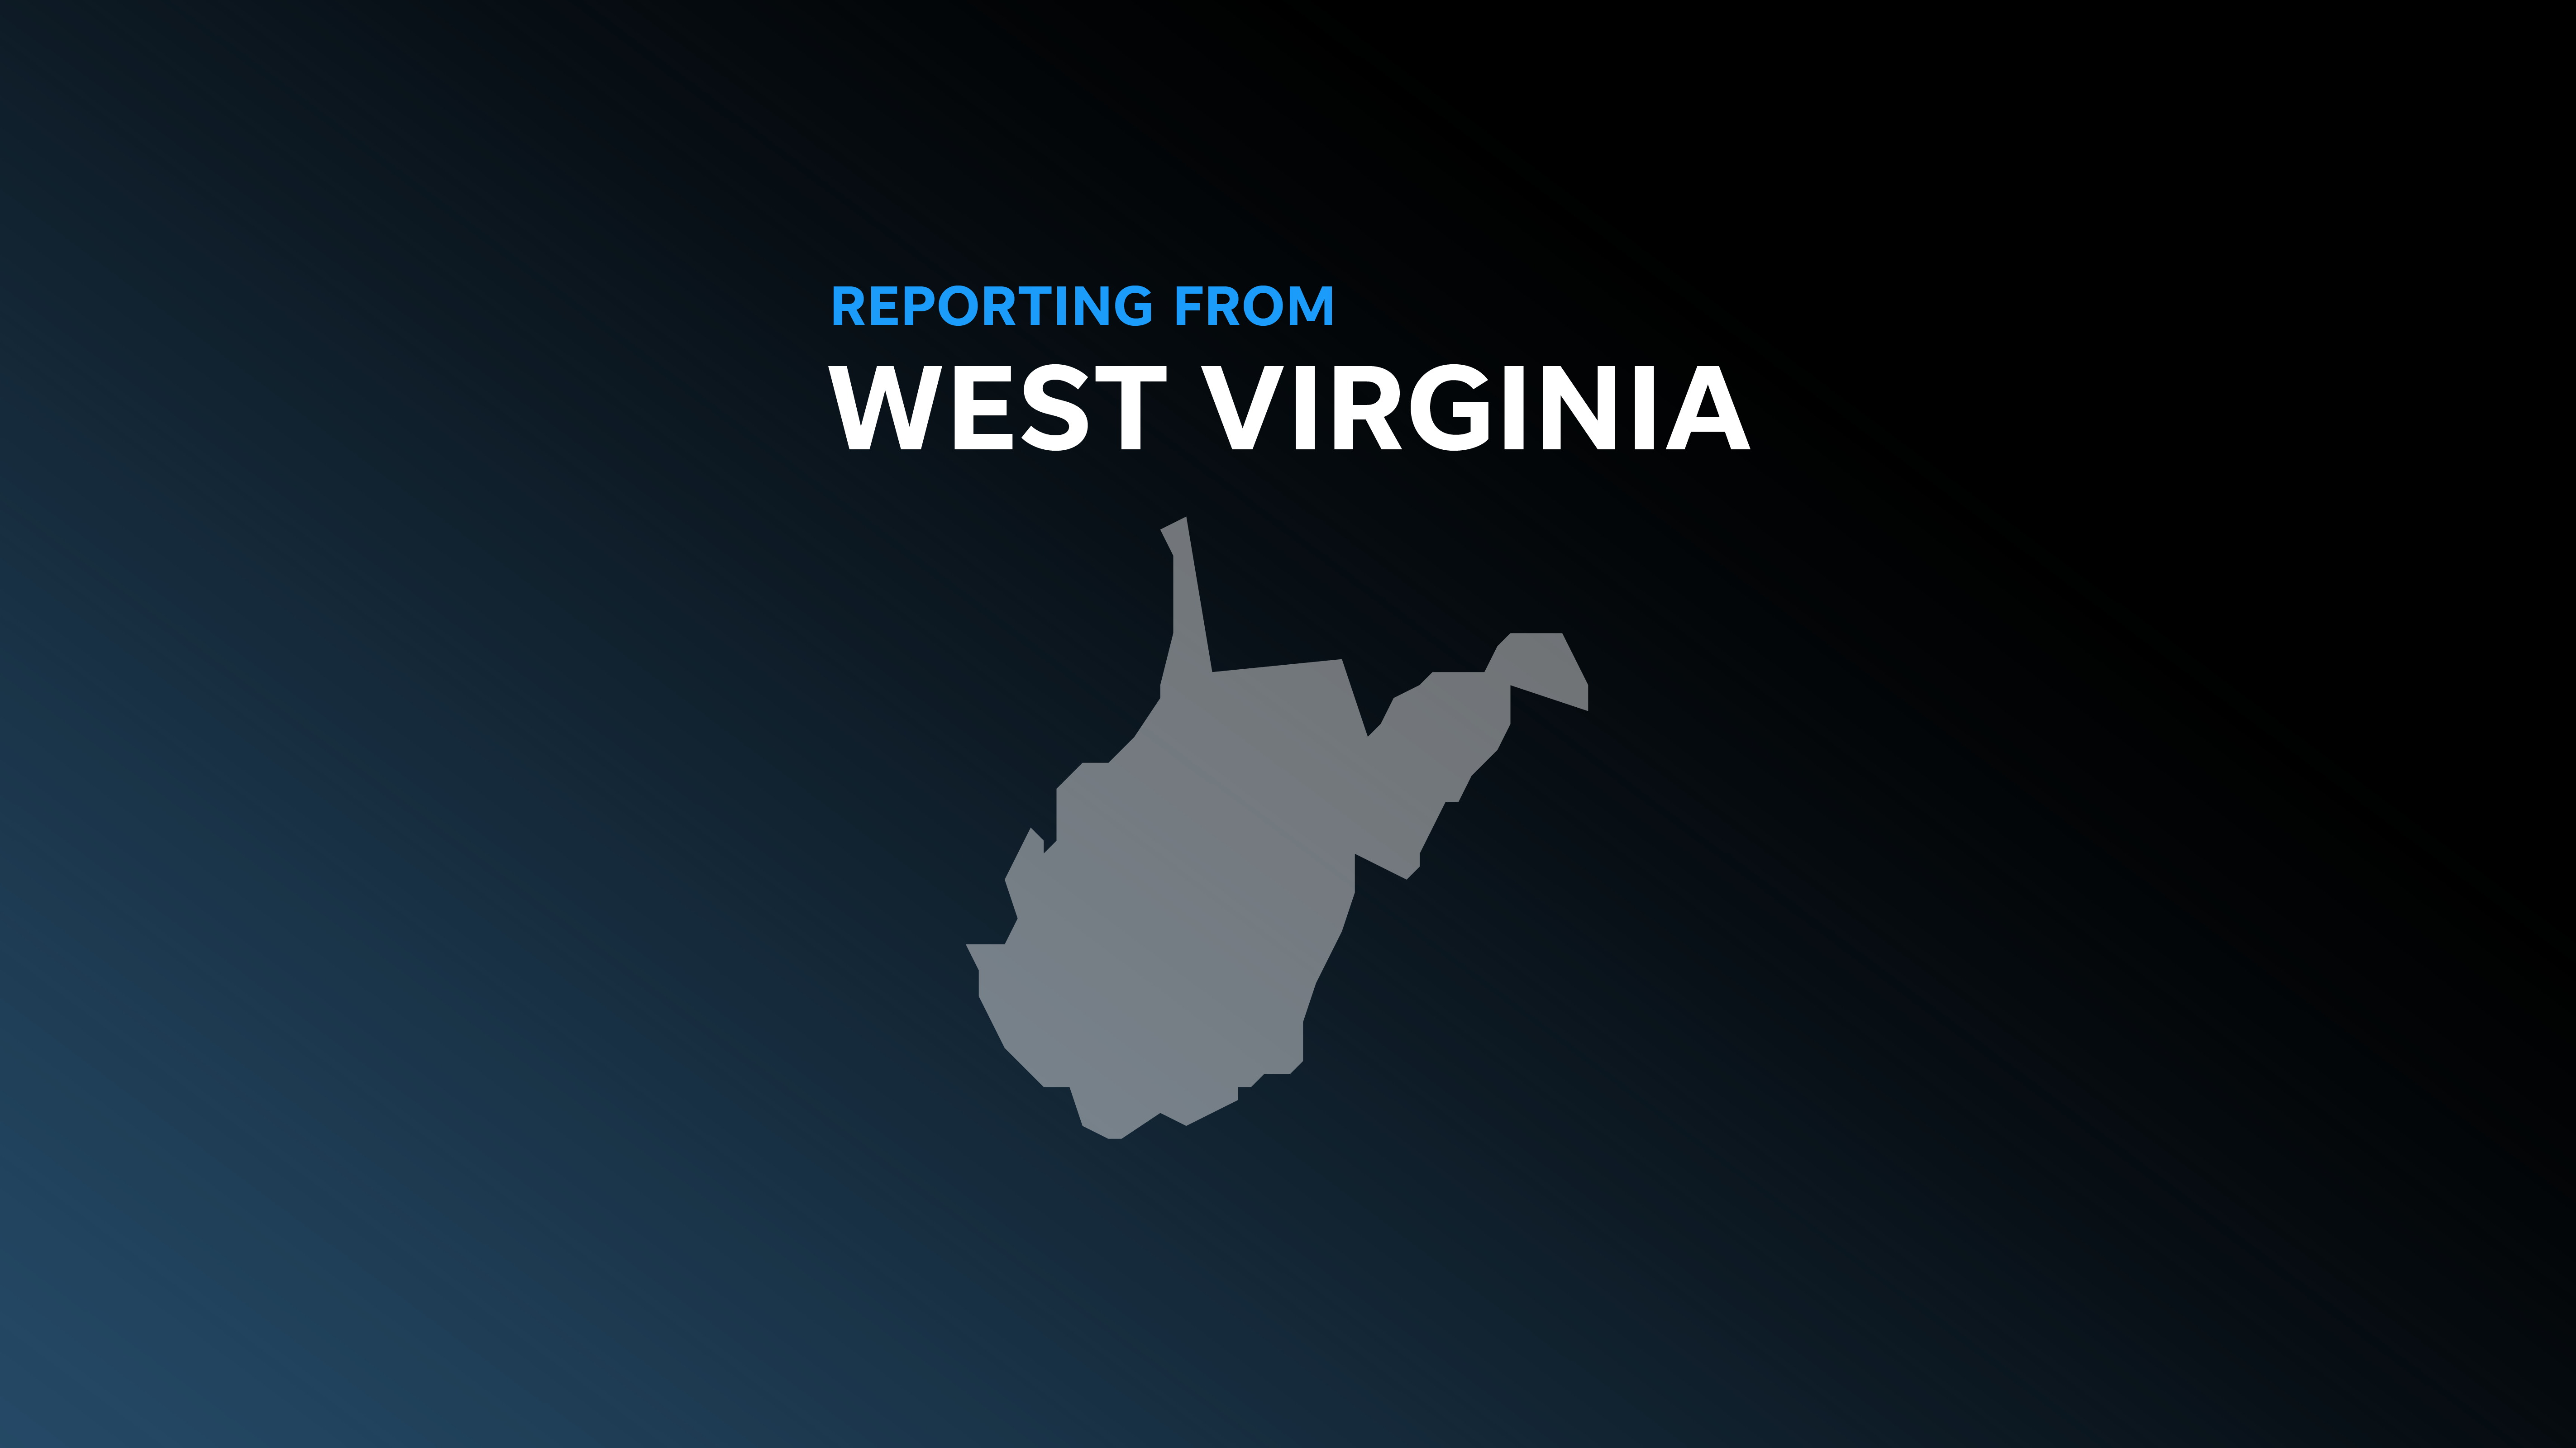 6 people dead after Vietnam War-era helicopter crashes in West Virginia